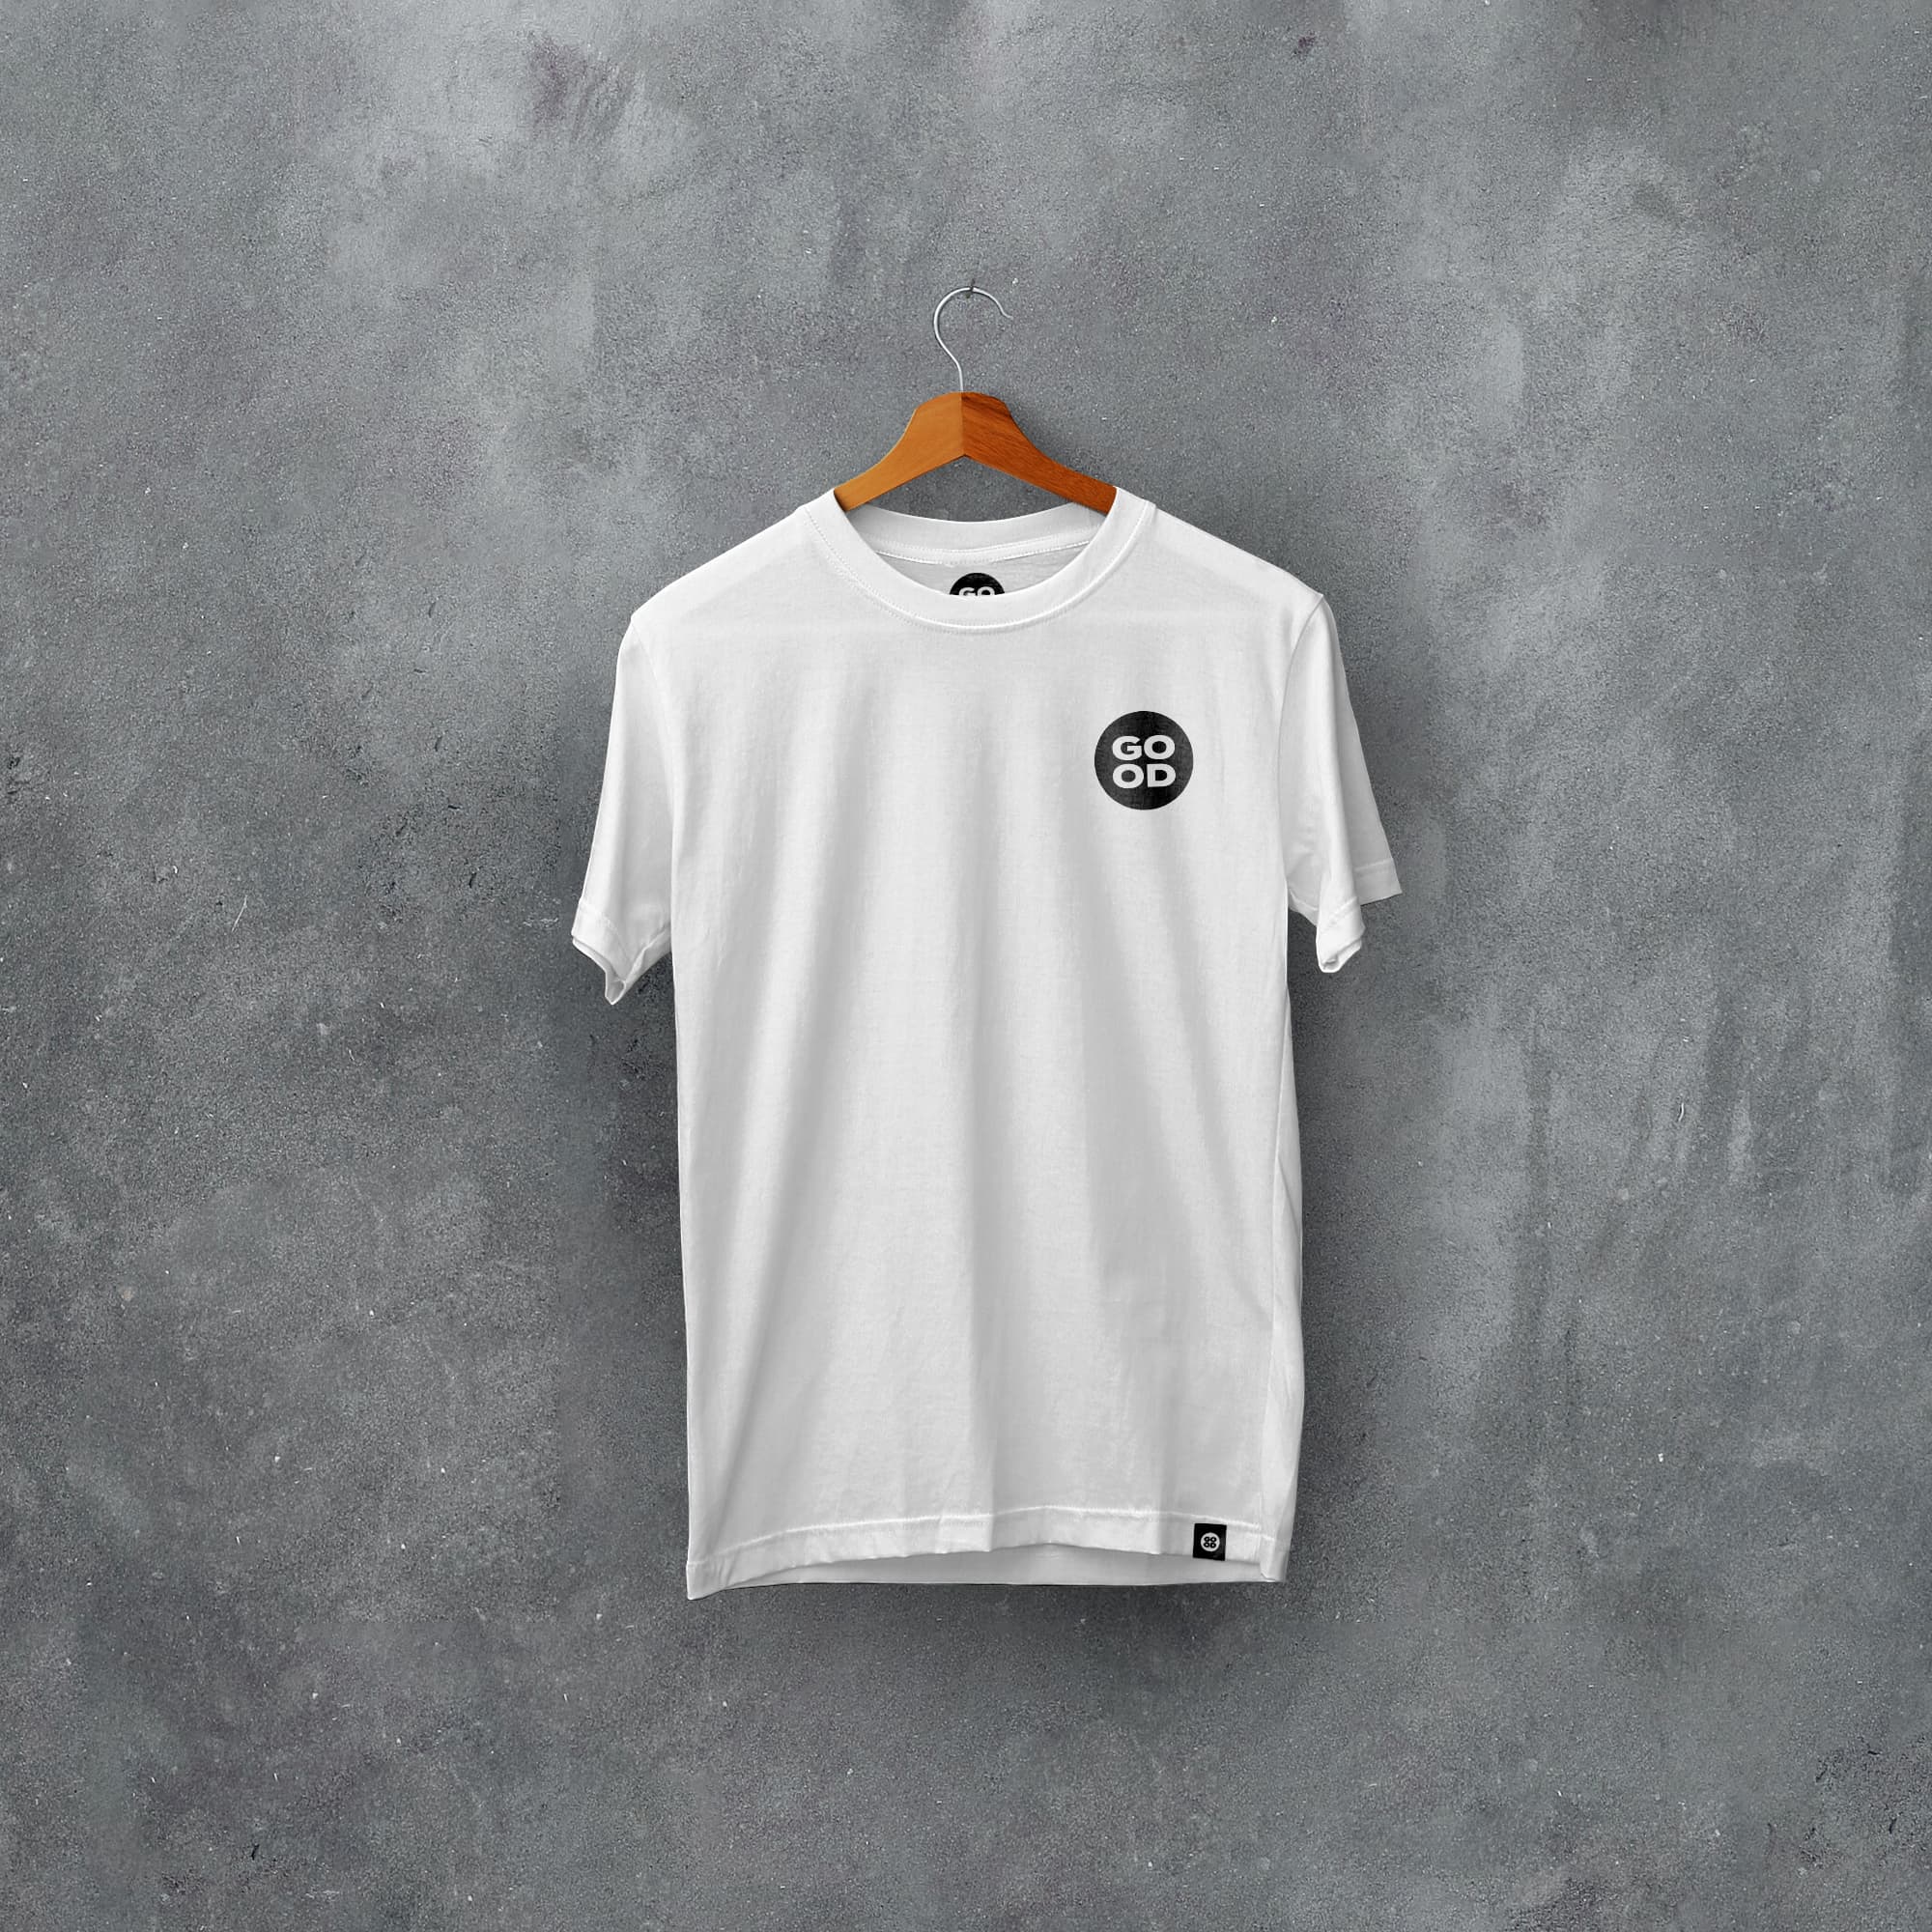 Newcastle Classic Kits Football T-Shirt